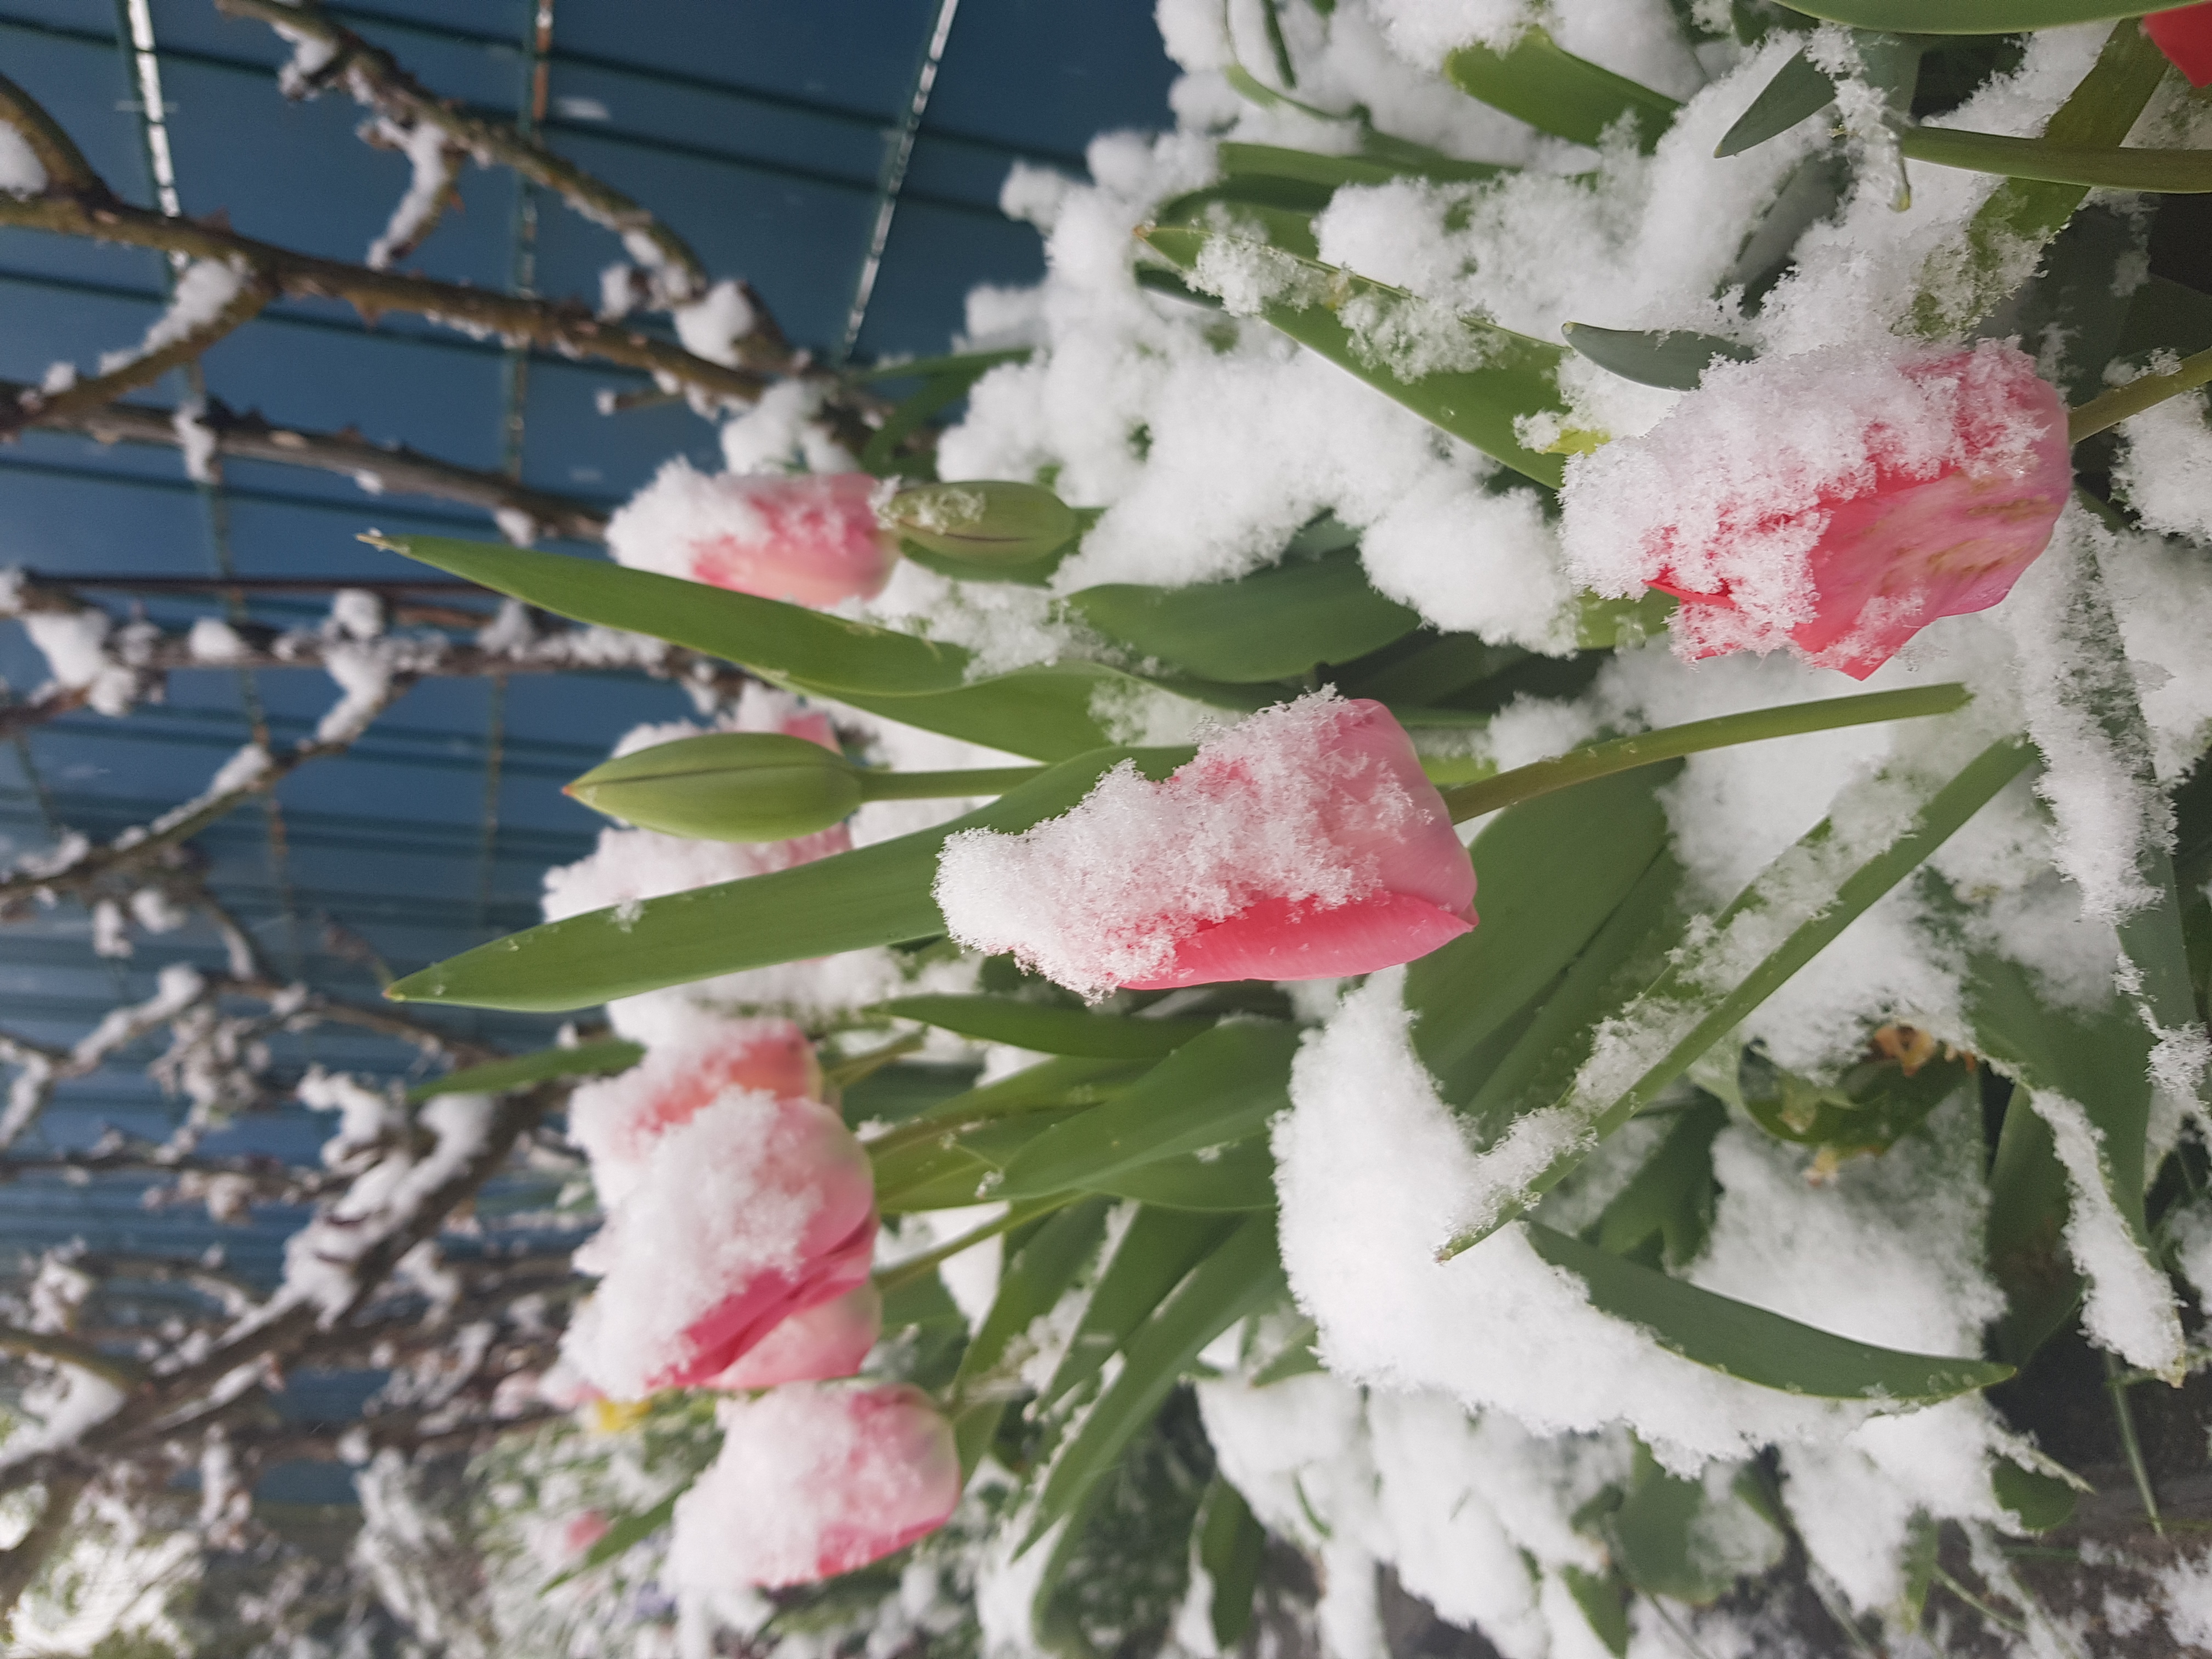 seven.pics presents - Цветы под снегом, Зима прощается 